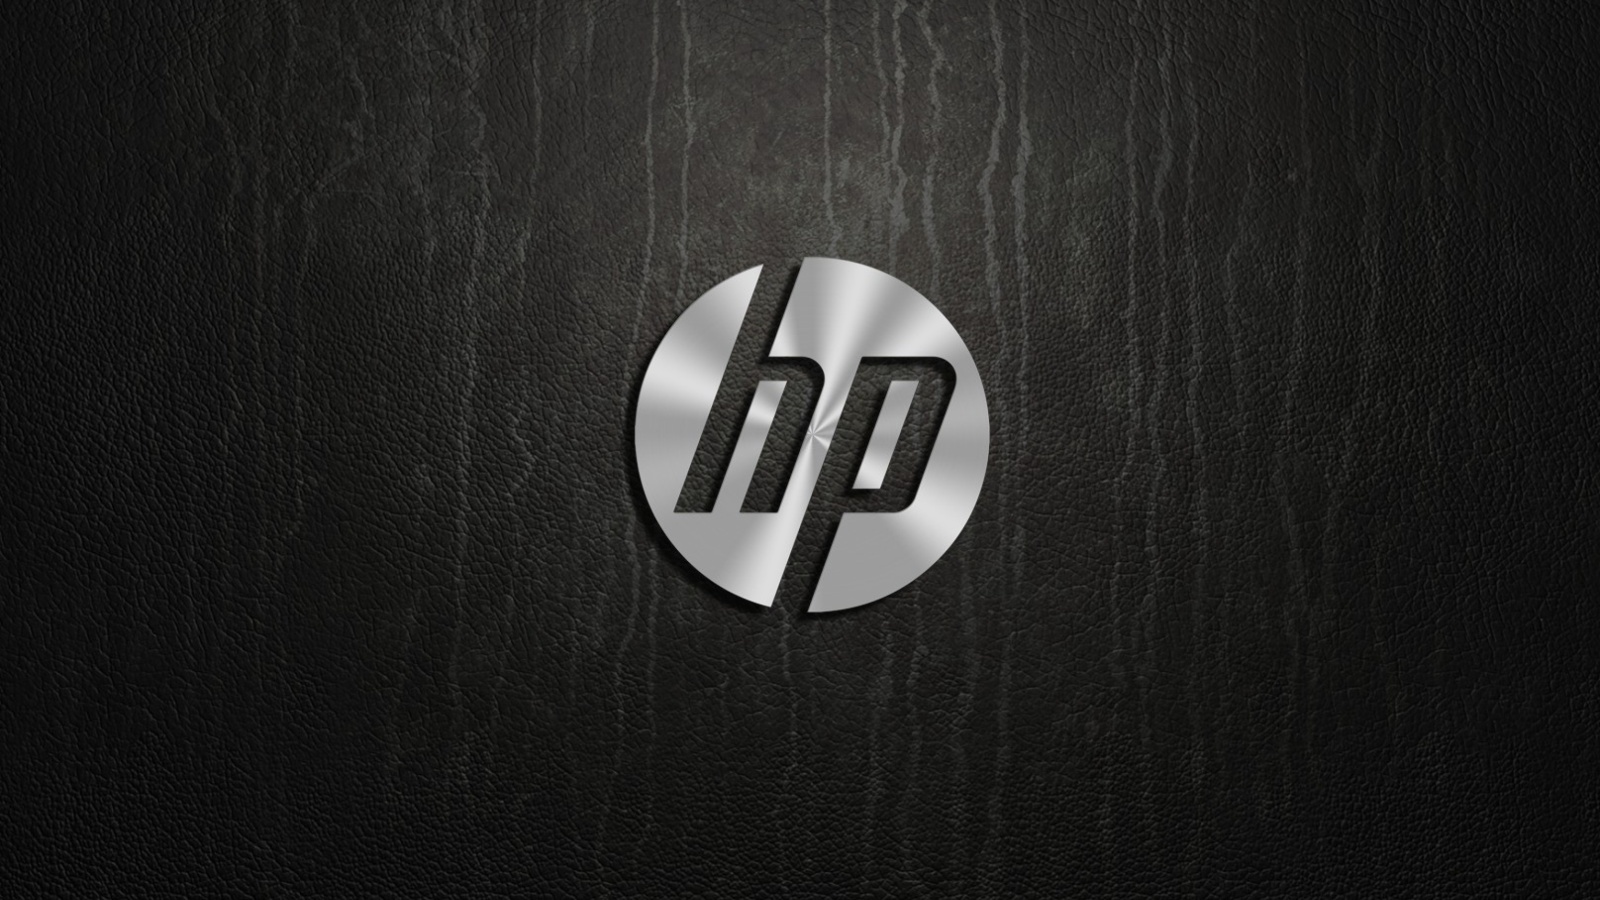 HP Dark Logo wallpaper 1600x900